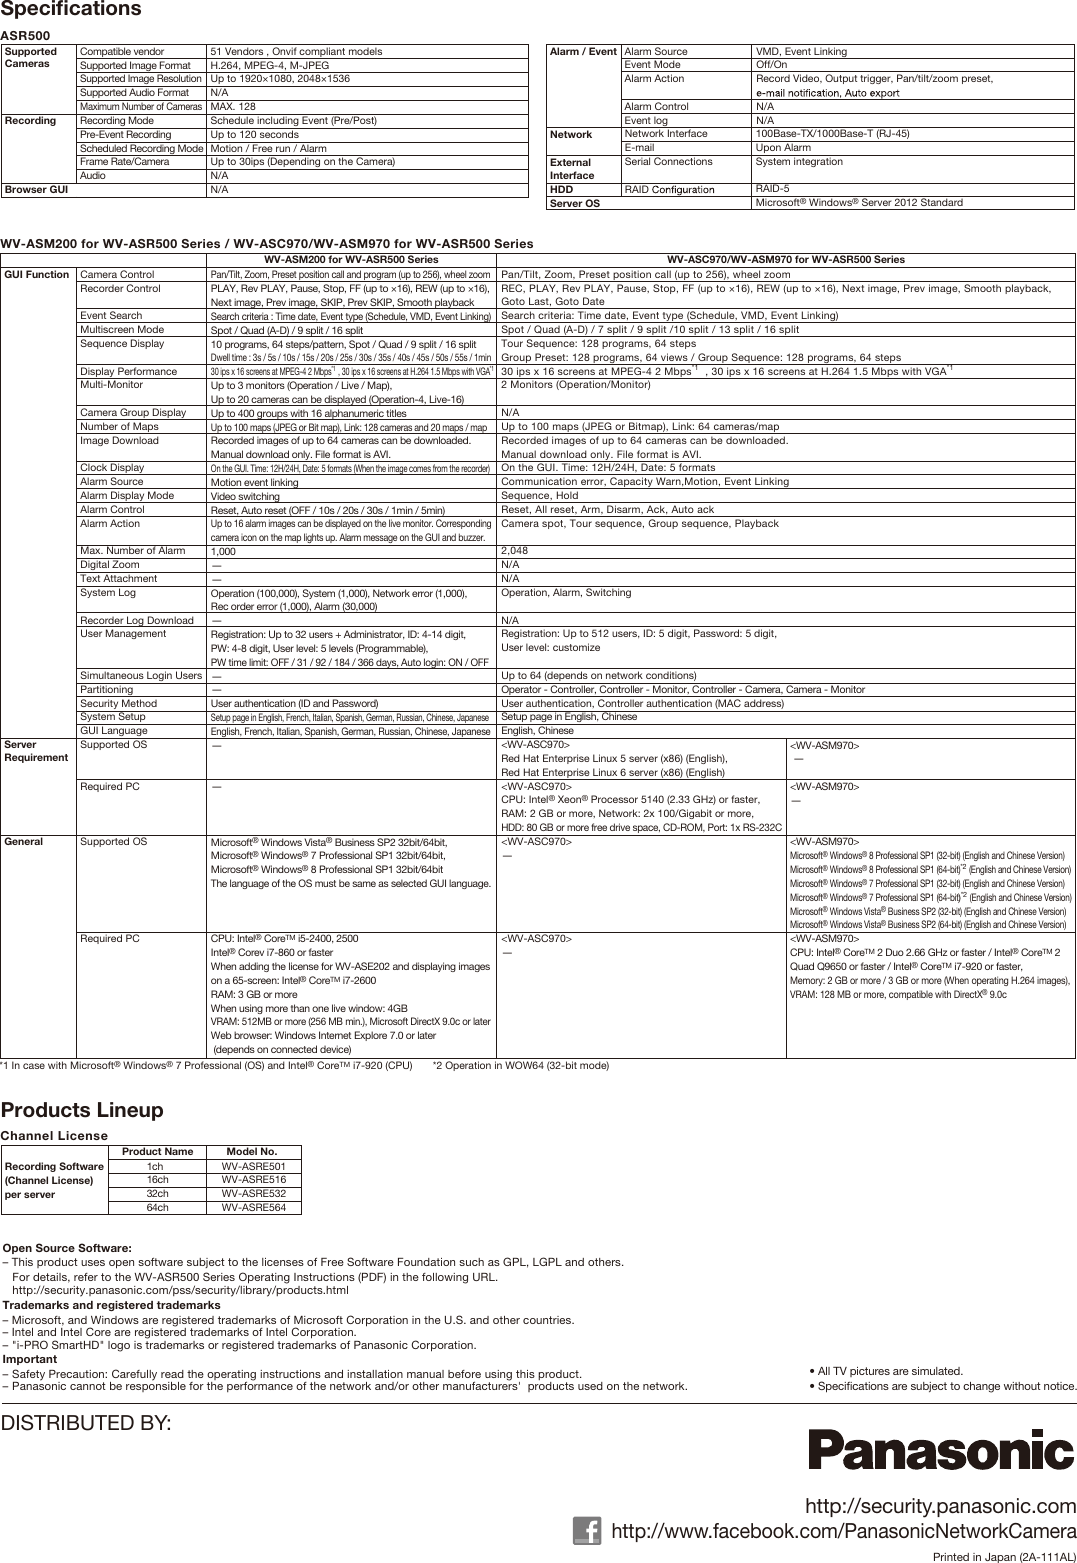 Page 2 of 2 - Panasonic Panasonic-Wv-Asr500-Specification-Sheet- WV-ASR500_2A-111ALF  Panasonic-wv-asr500-specification-sheet